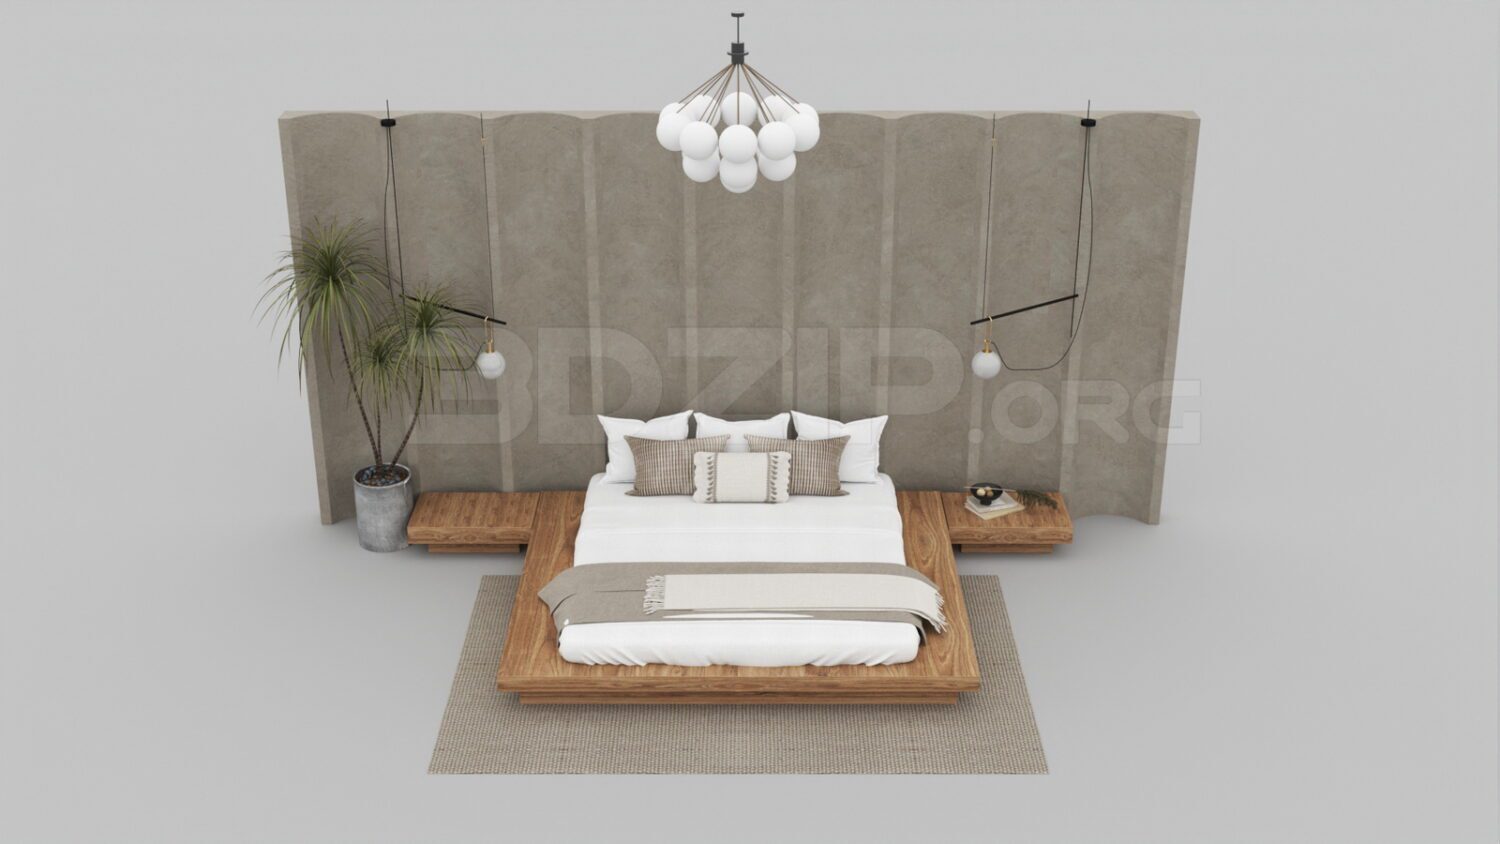 3781. Free 3D Bed Model Download